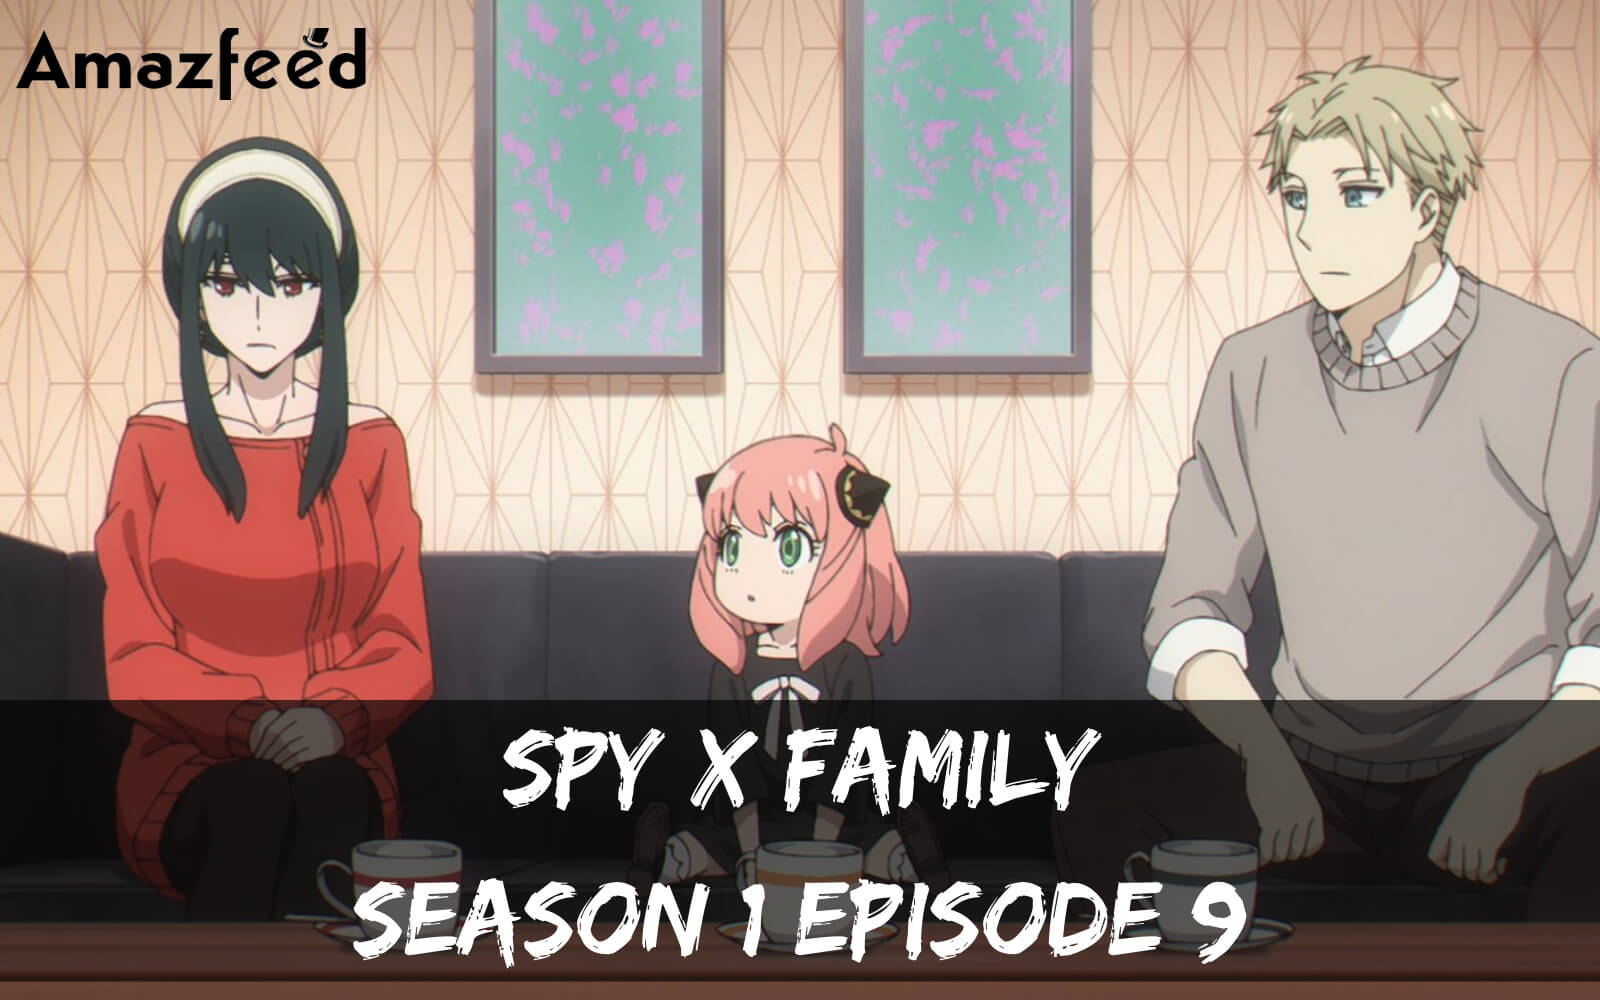 Spy x Family Season 1 Episode 9 ⇒ Release Date, Spoilers, Recap, Cast &  News Updates » Amazfeed